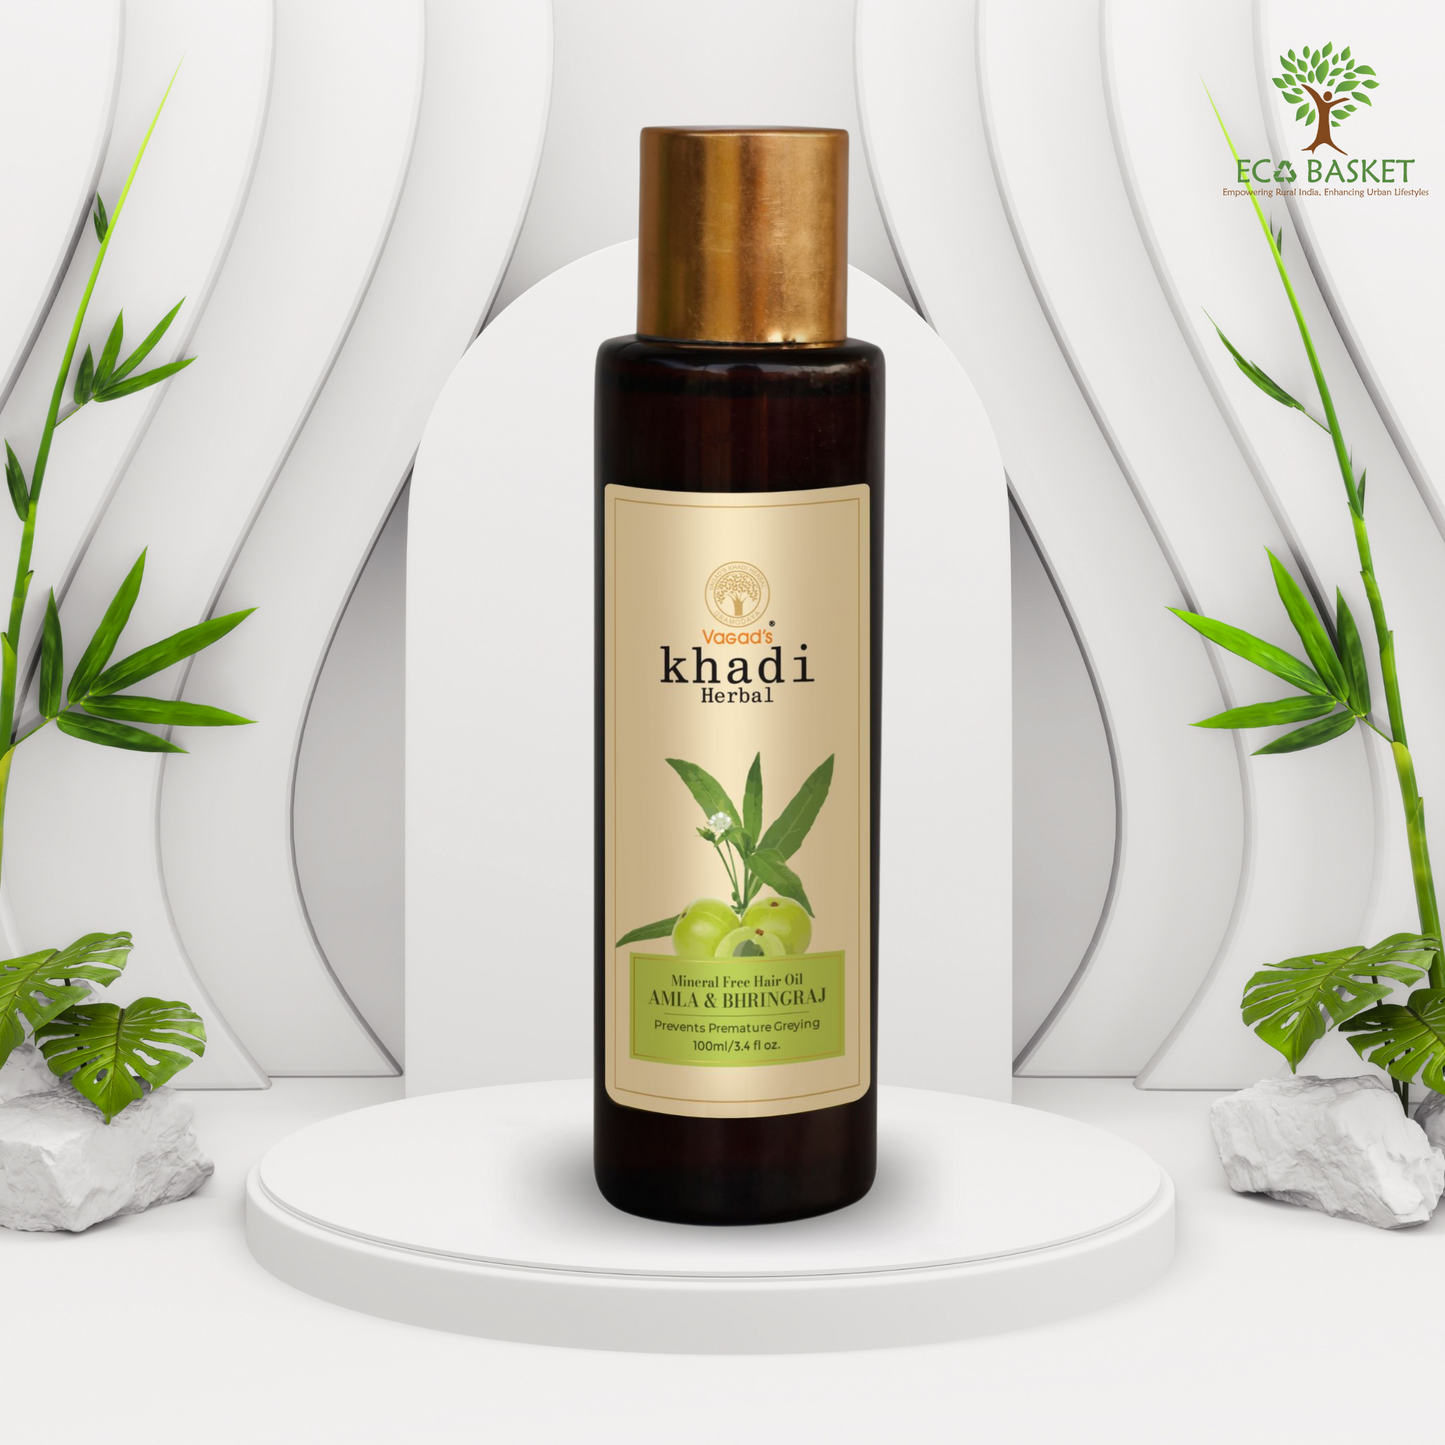 Pure Amla & Bhringraj Mineral Free Hair Oil